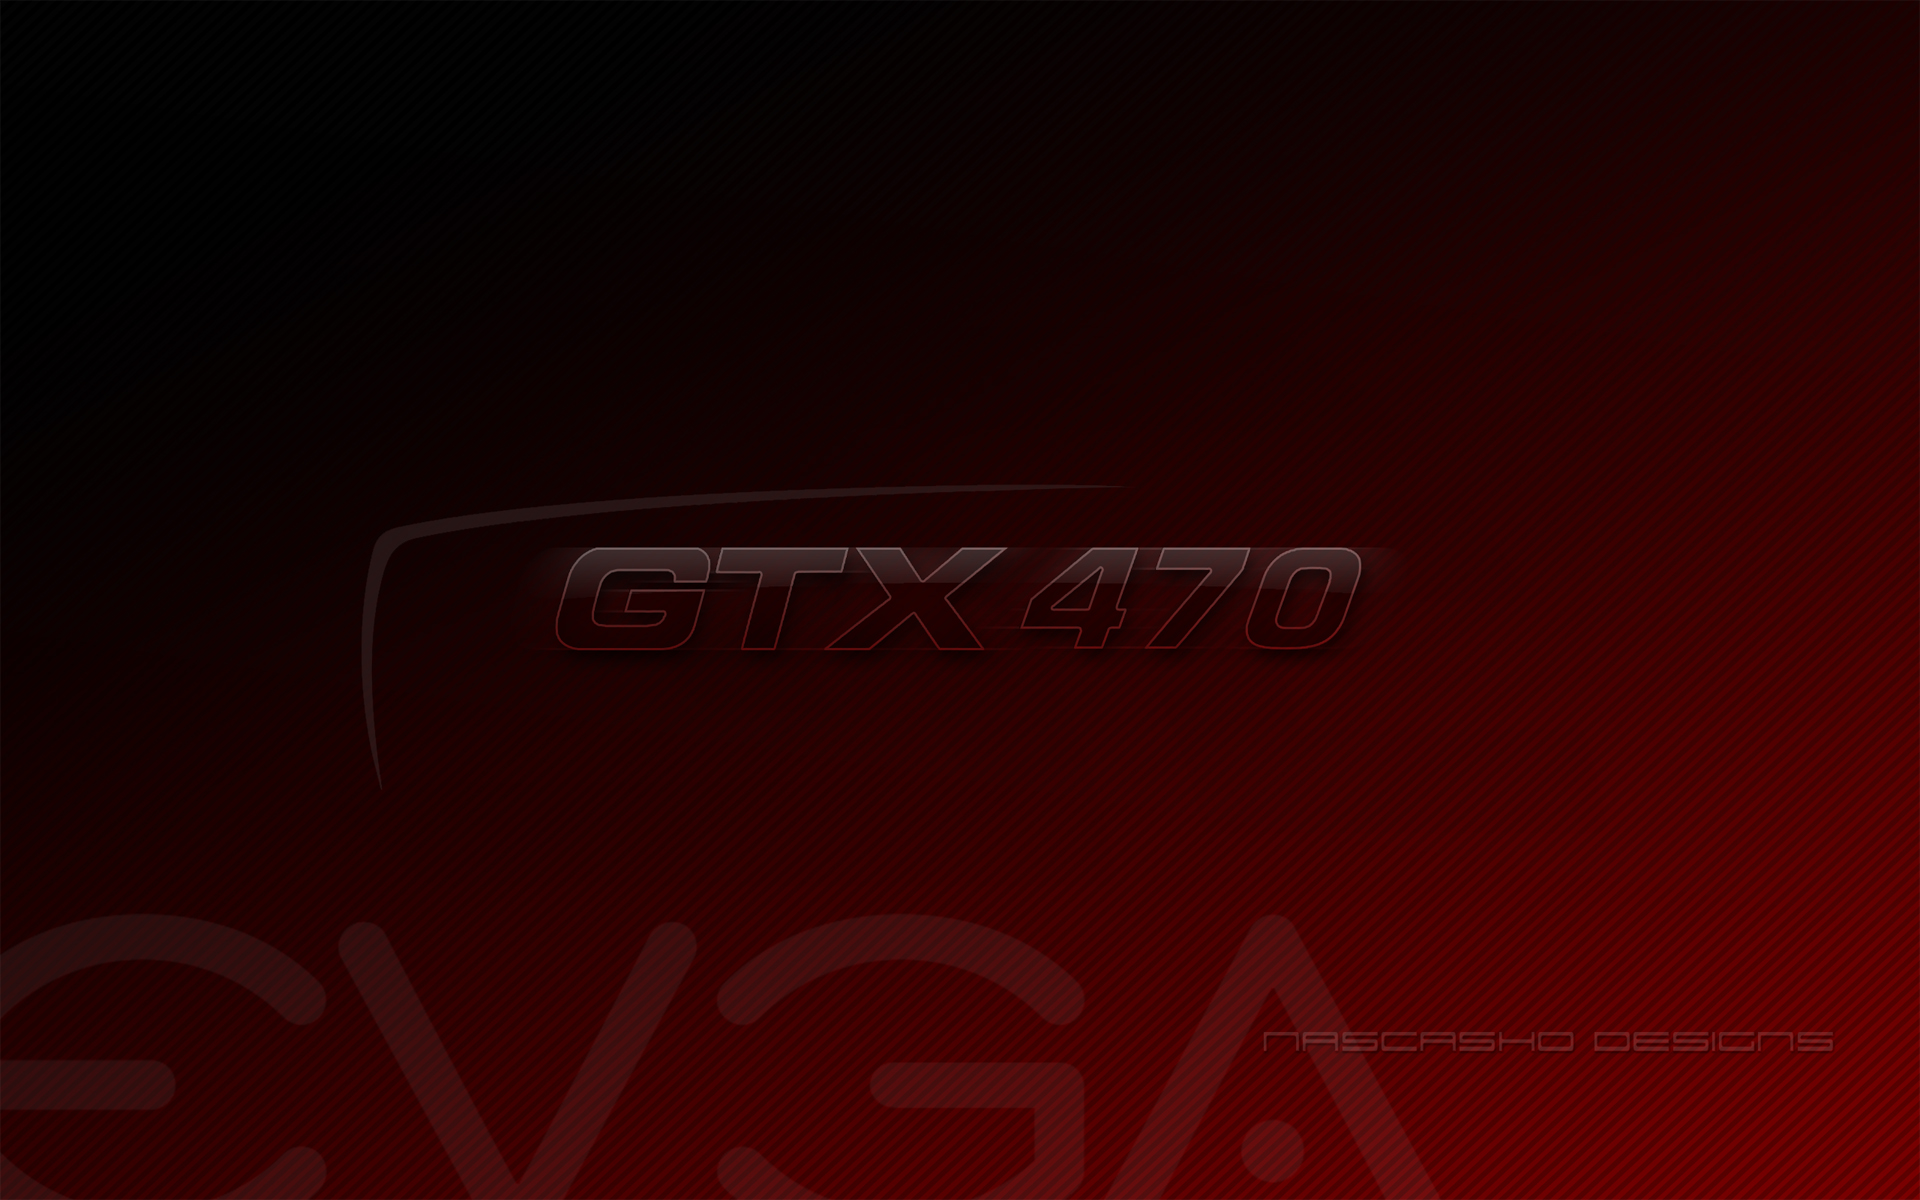 Evga Logo Along With The Gtx Series Theme Are Copyright Of